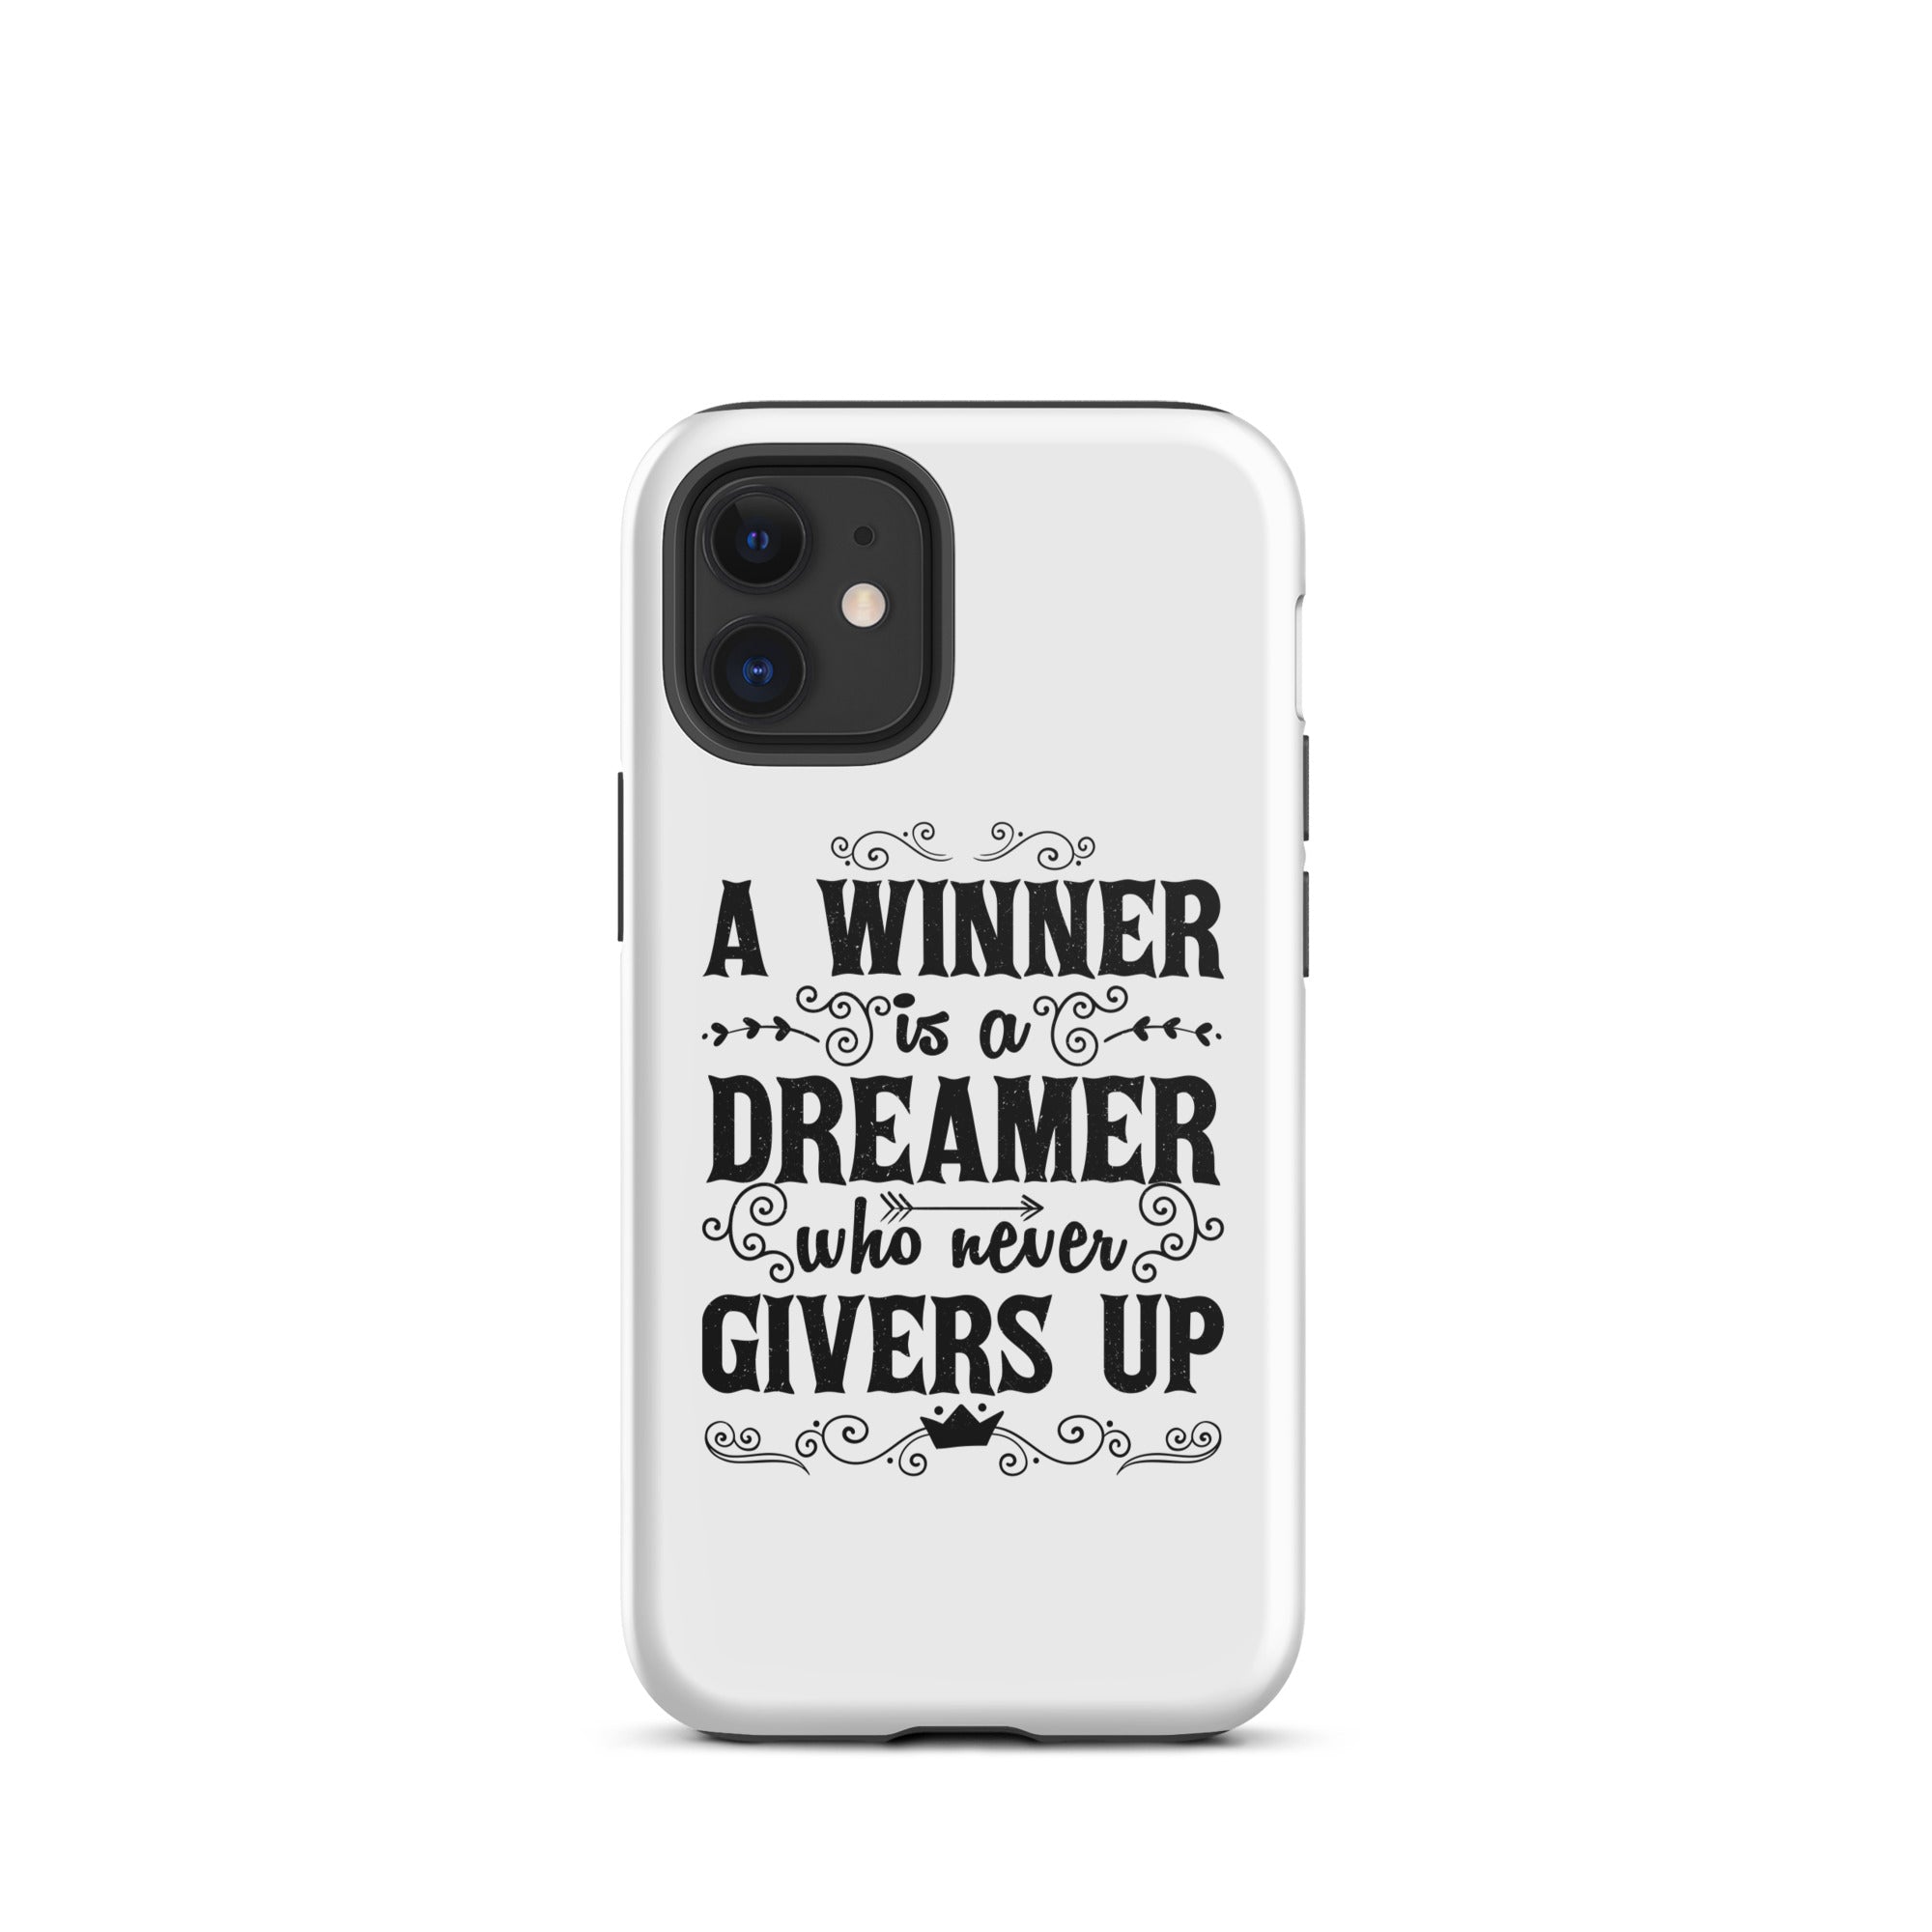 A Winner Is A Dreamer - Tough iPhone case